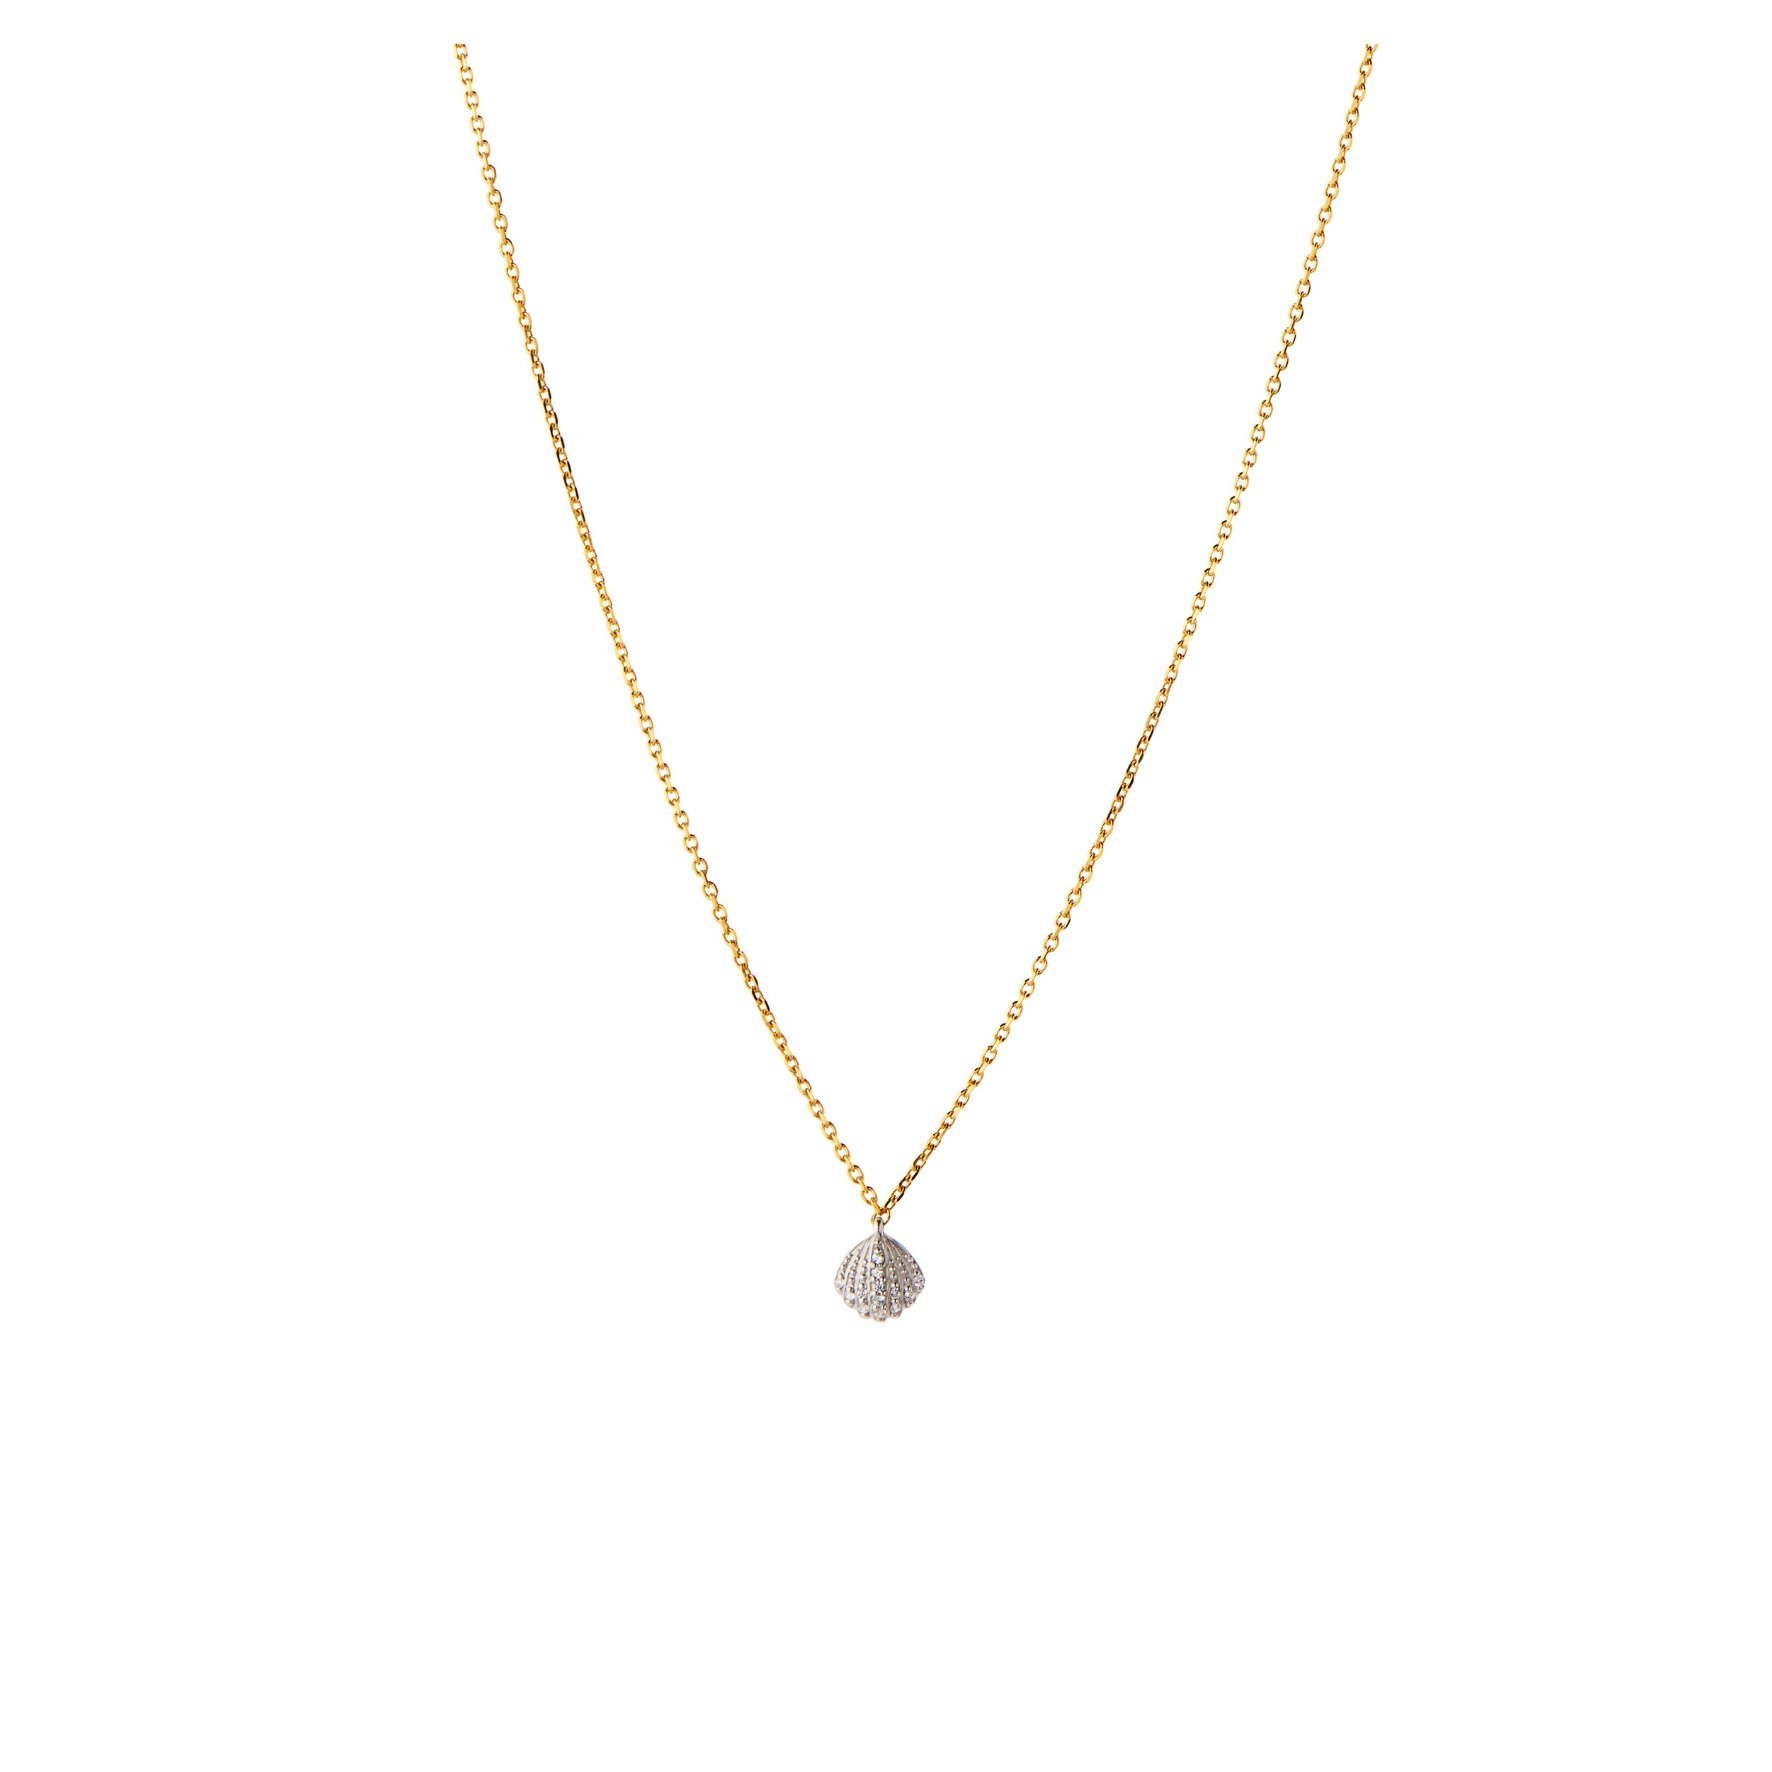 Tres Petit Vintage Shell Necklace fra STINE A Jewelry i Forgylt-Sølv Sterling 925